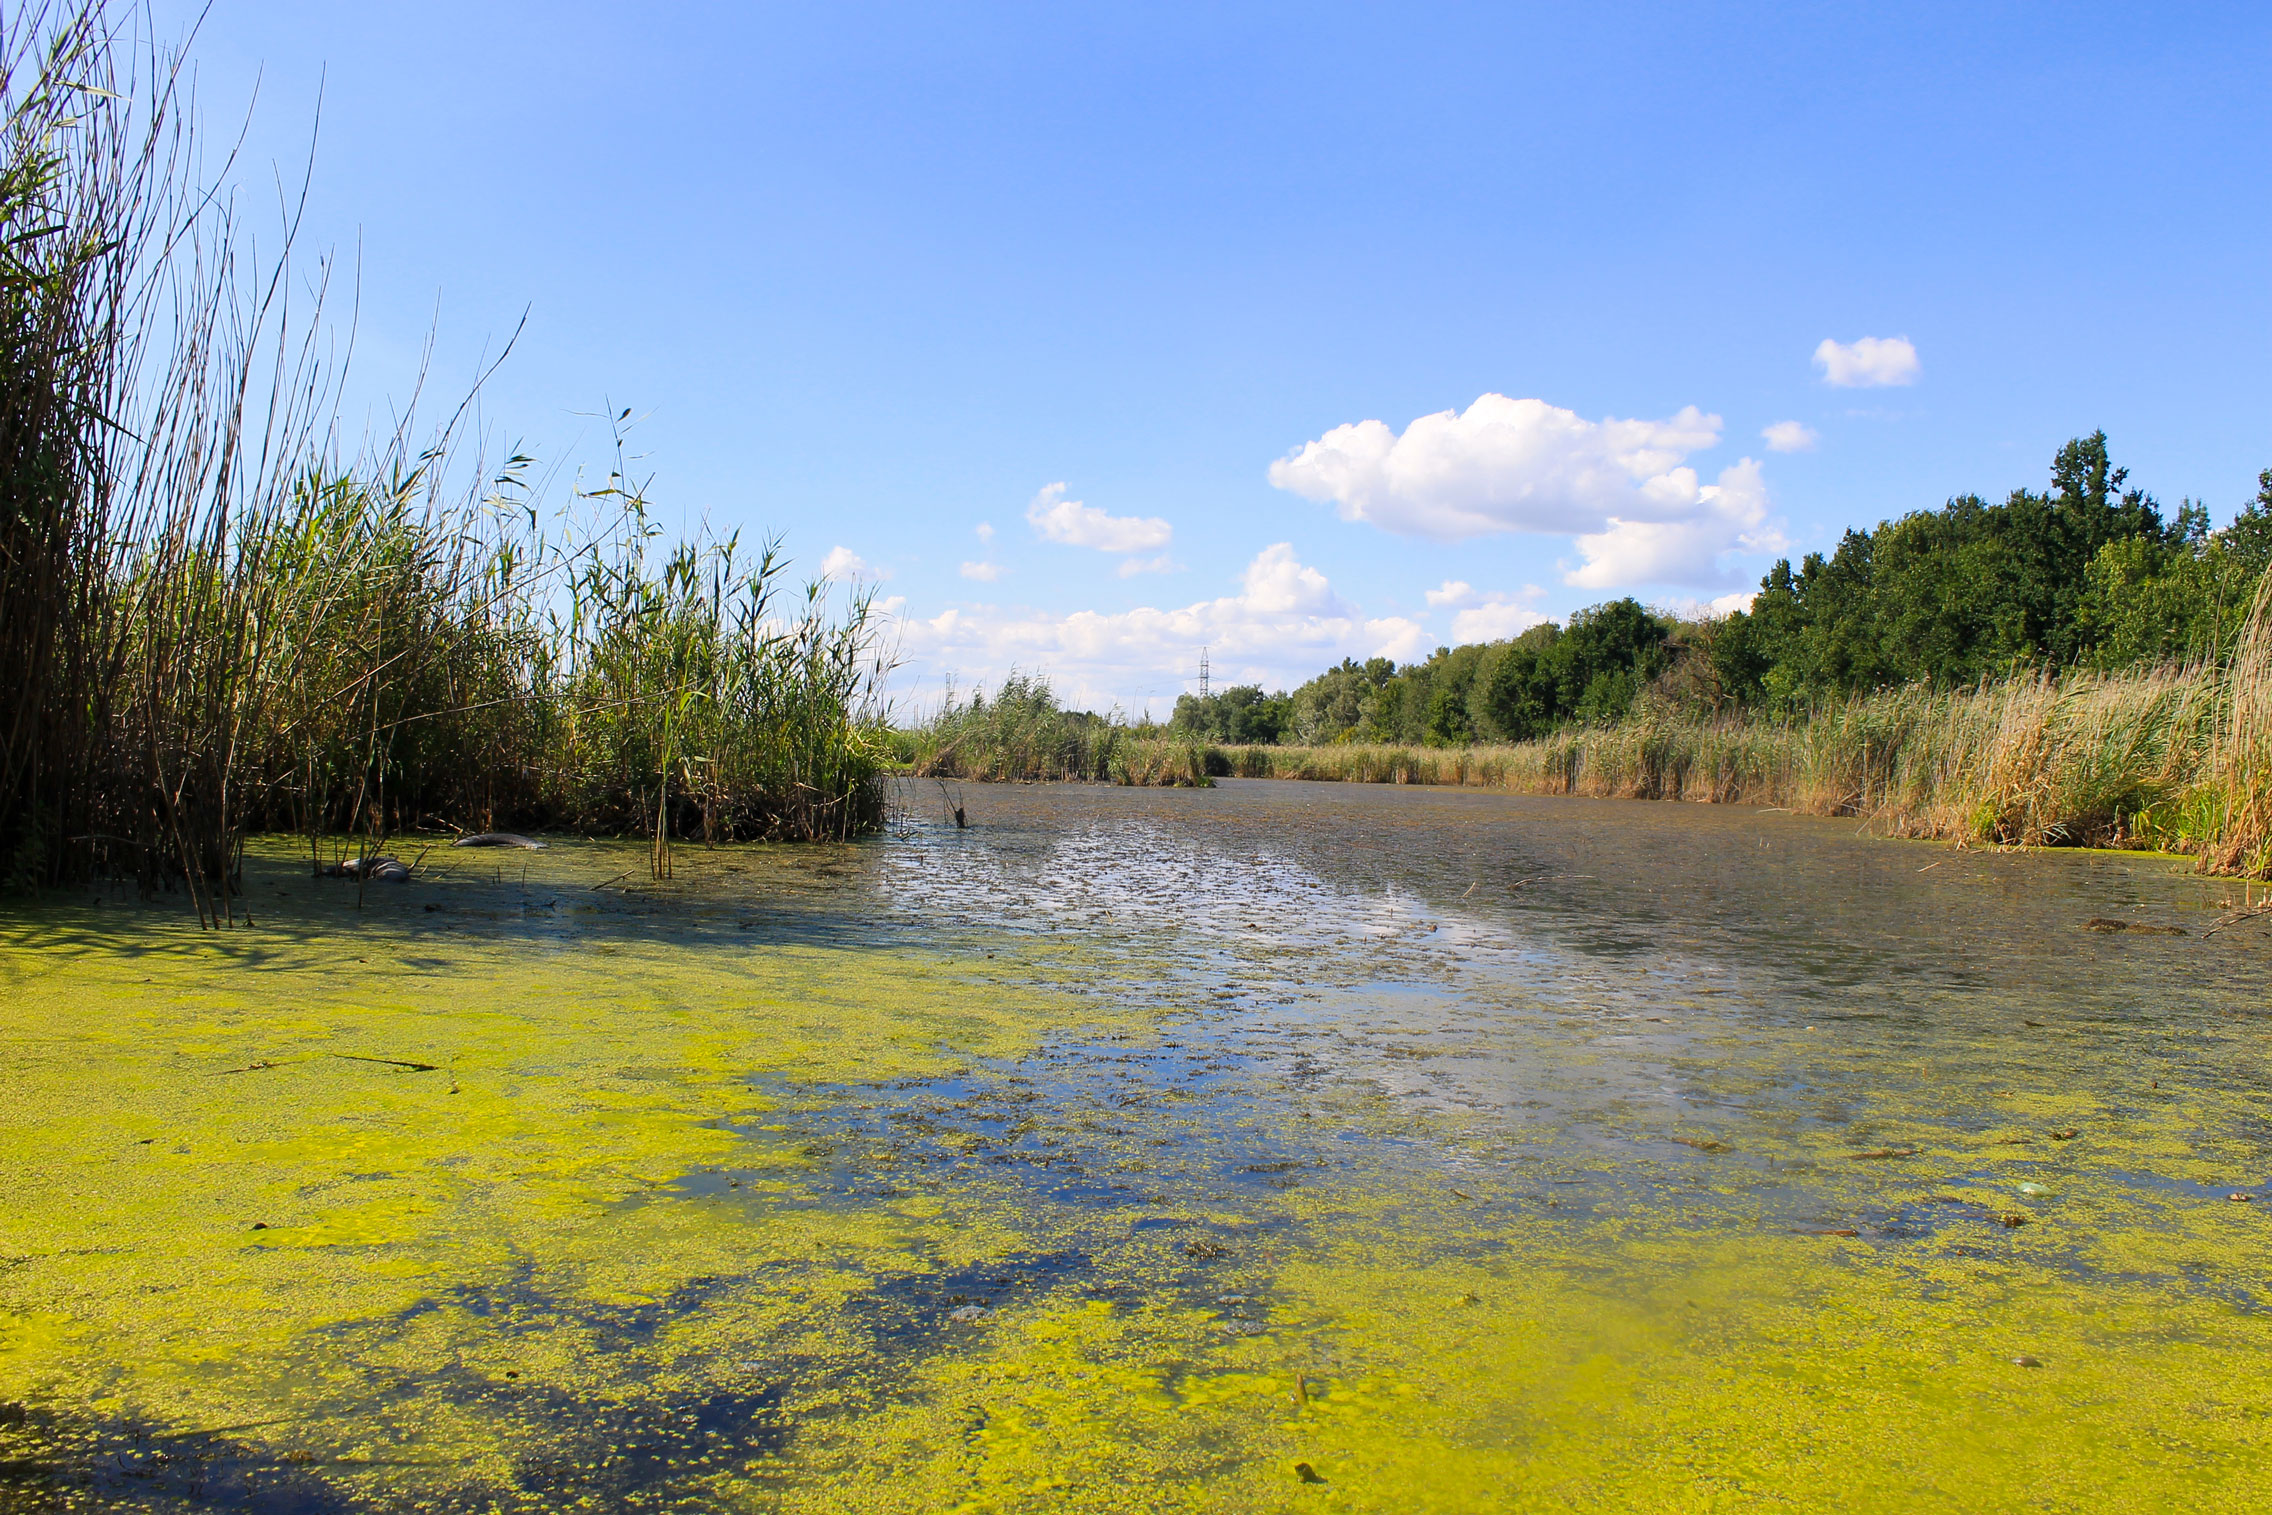 toxic algae bloom in pond